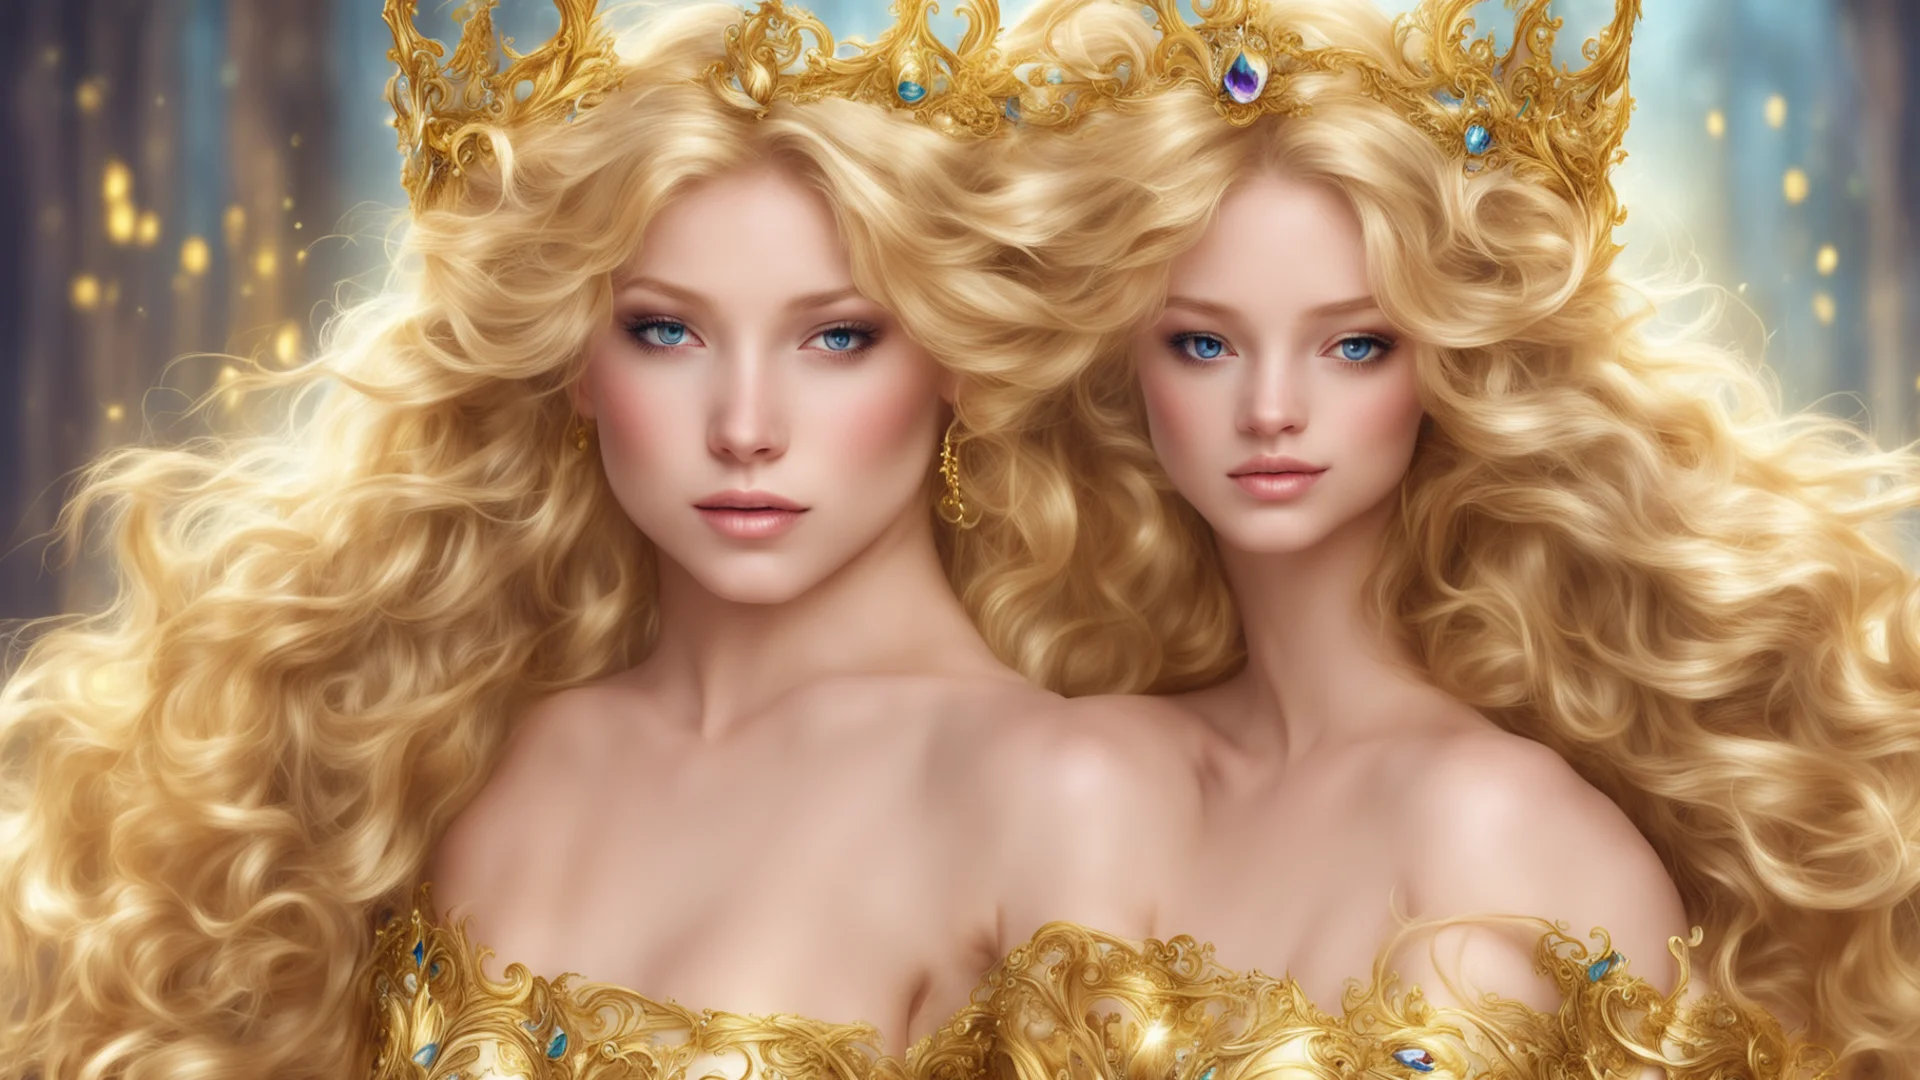 princess golden blonde fantasy art good looking trending fantastic 1 amazing awesome portrait 2 wide